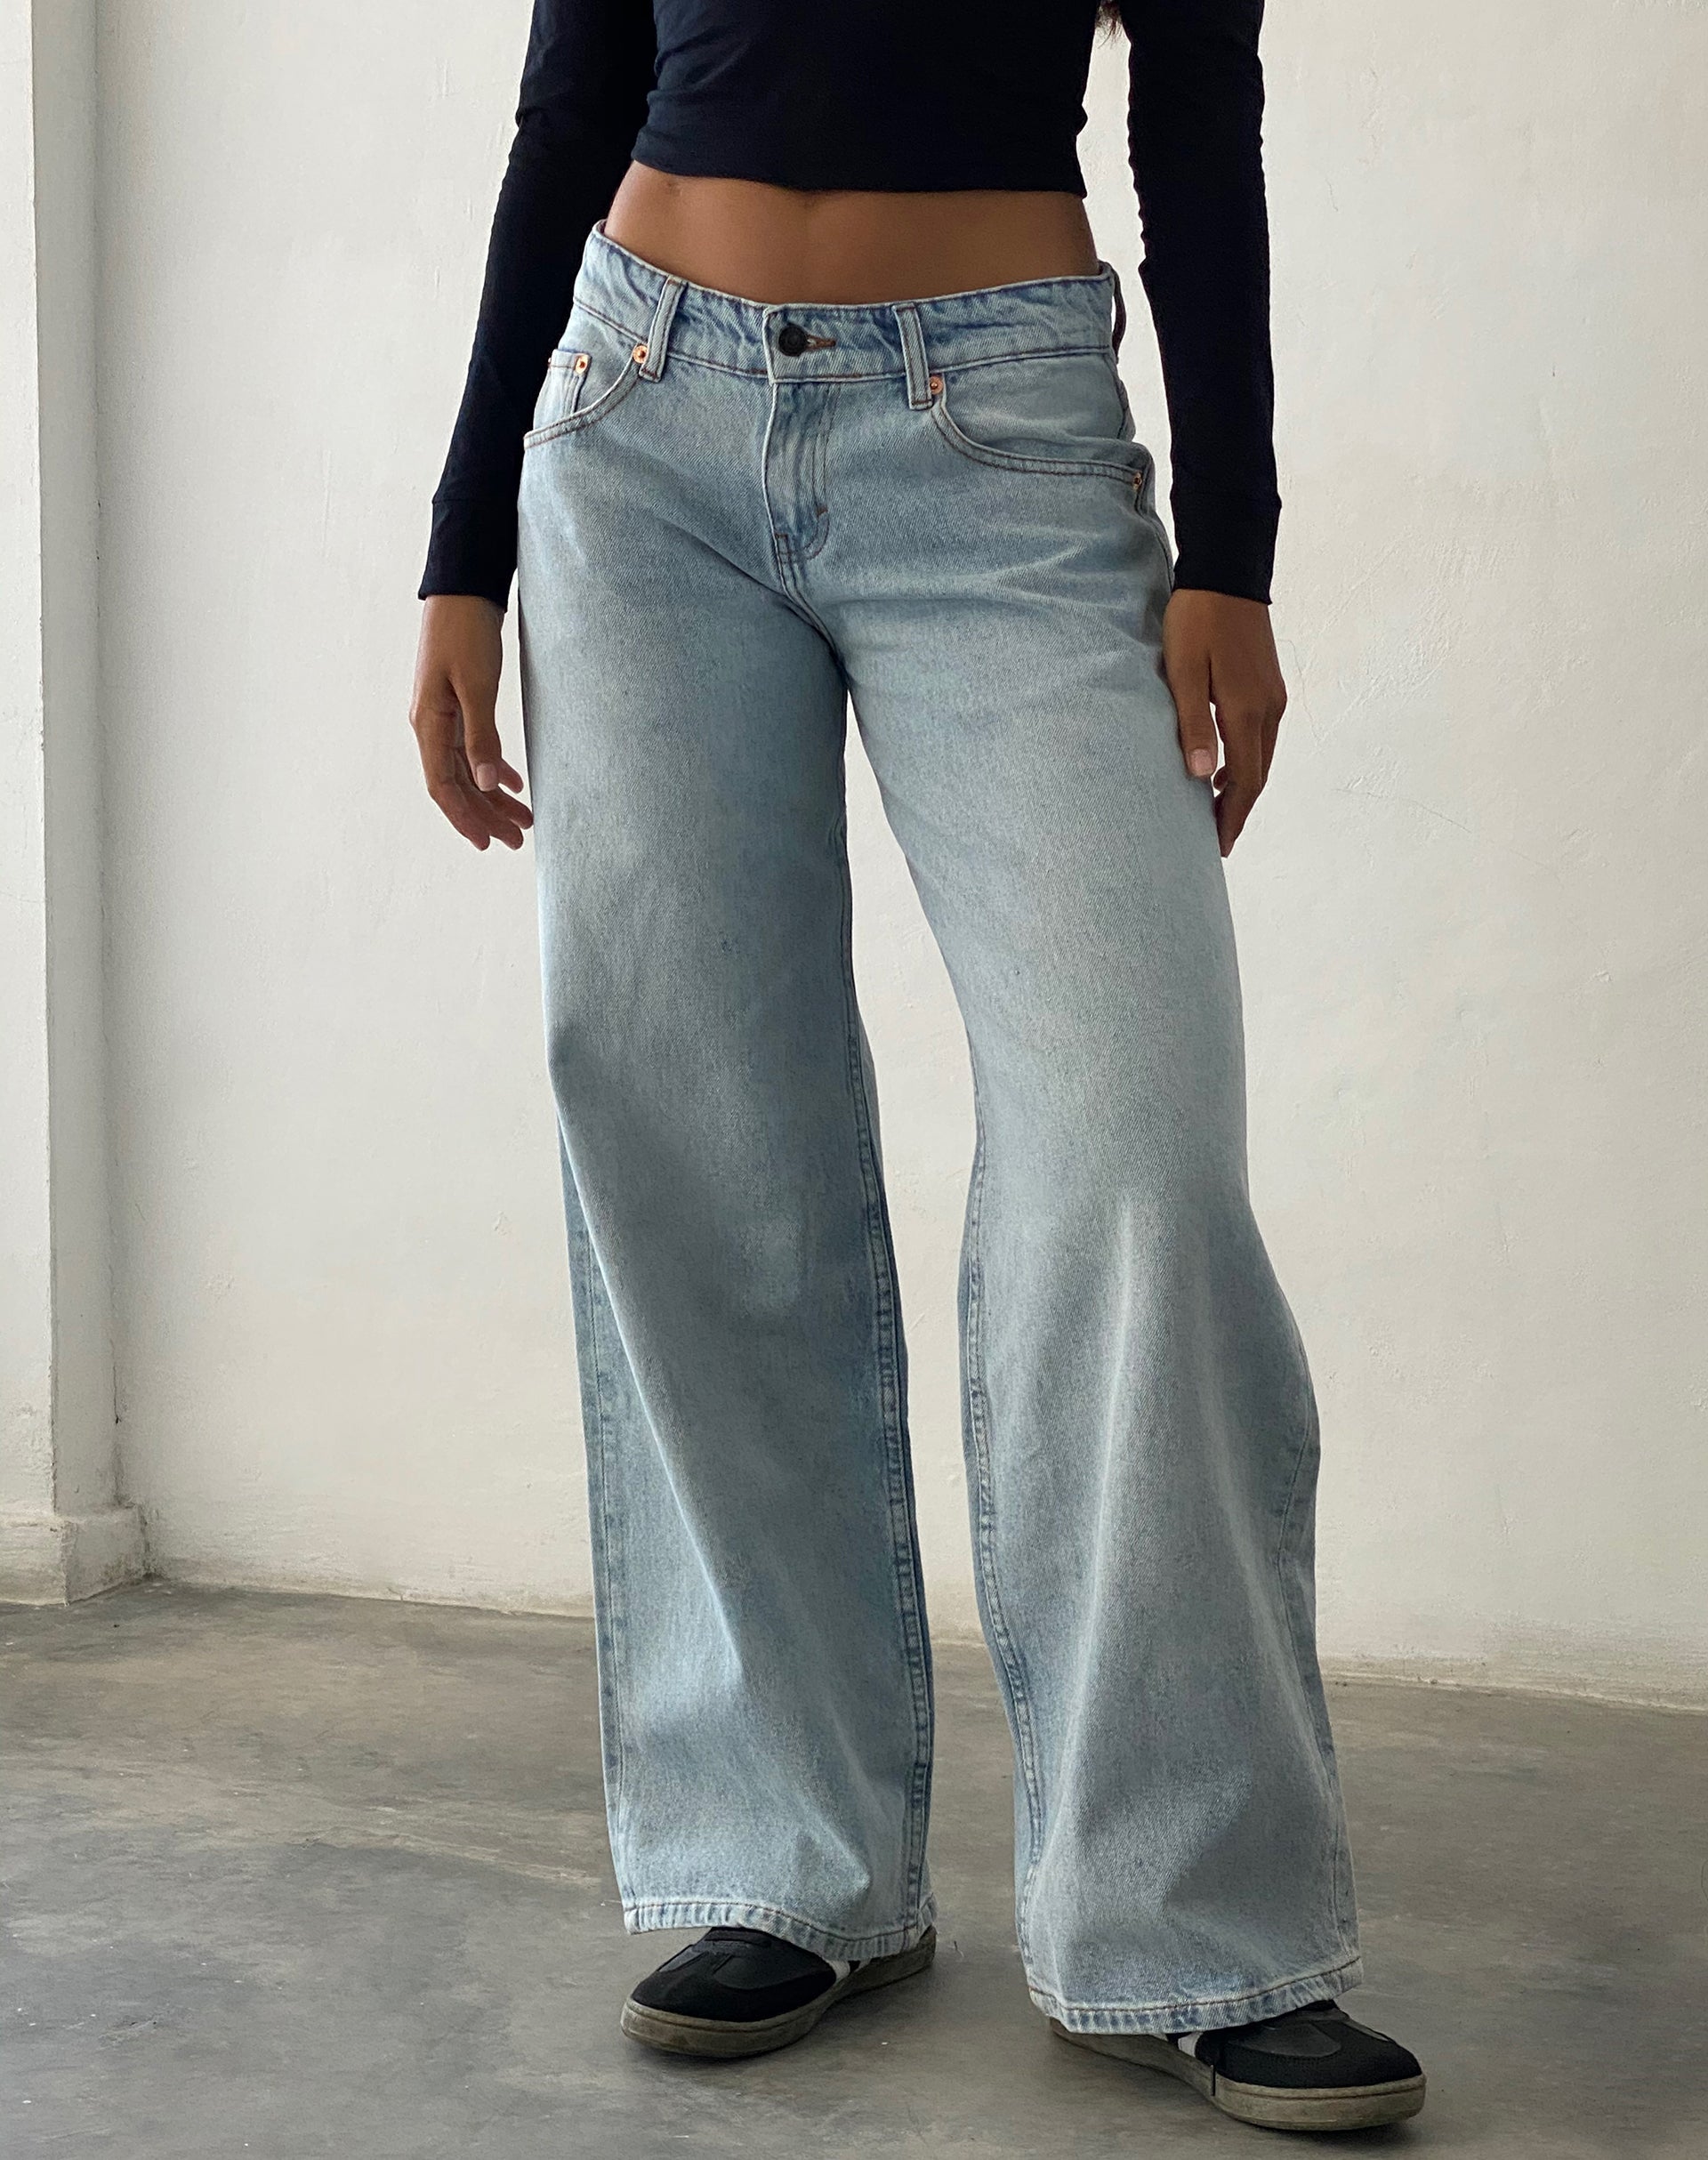 Extreme Black Flared Jeans  Low Rise – motelrocks-com-us